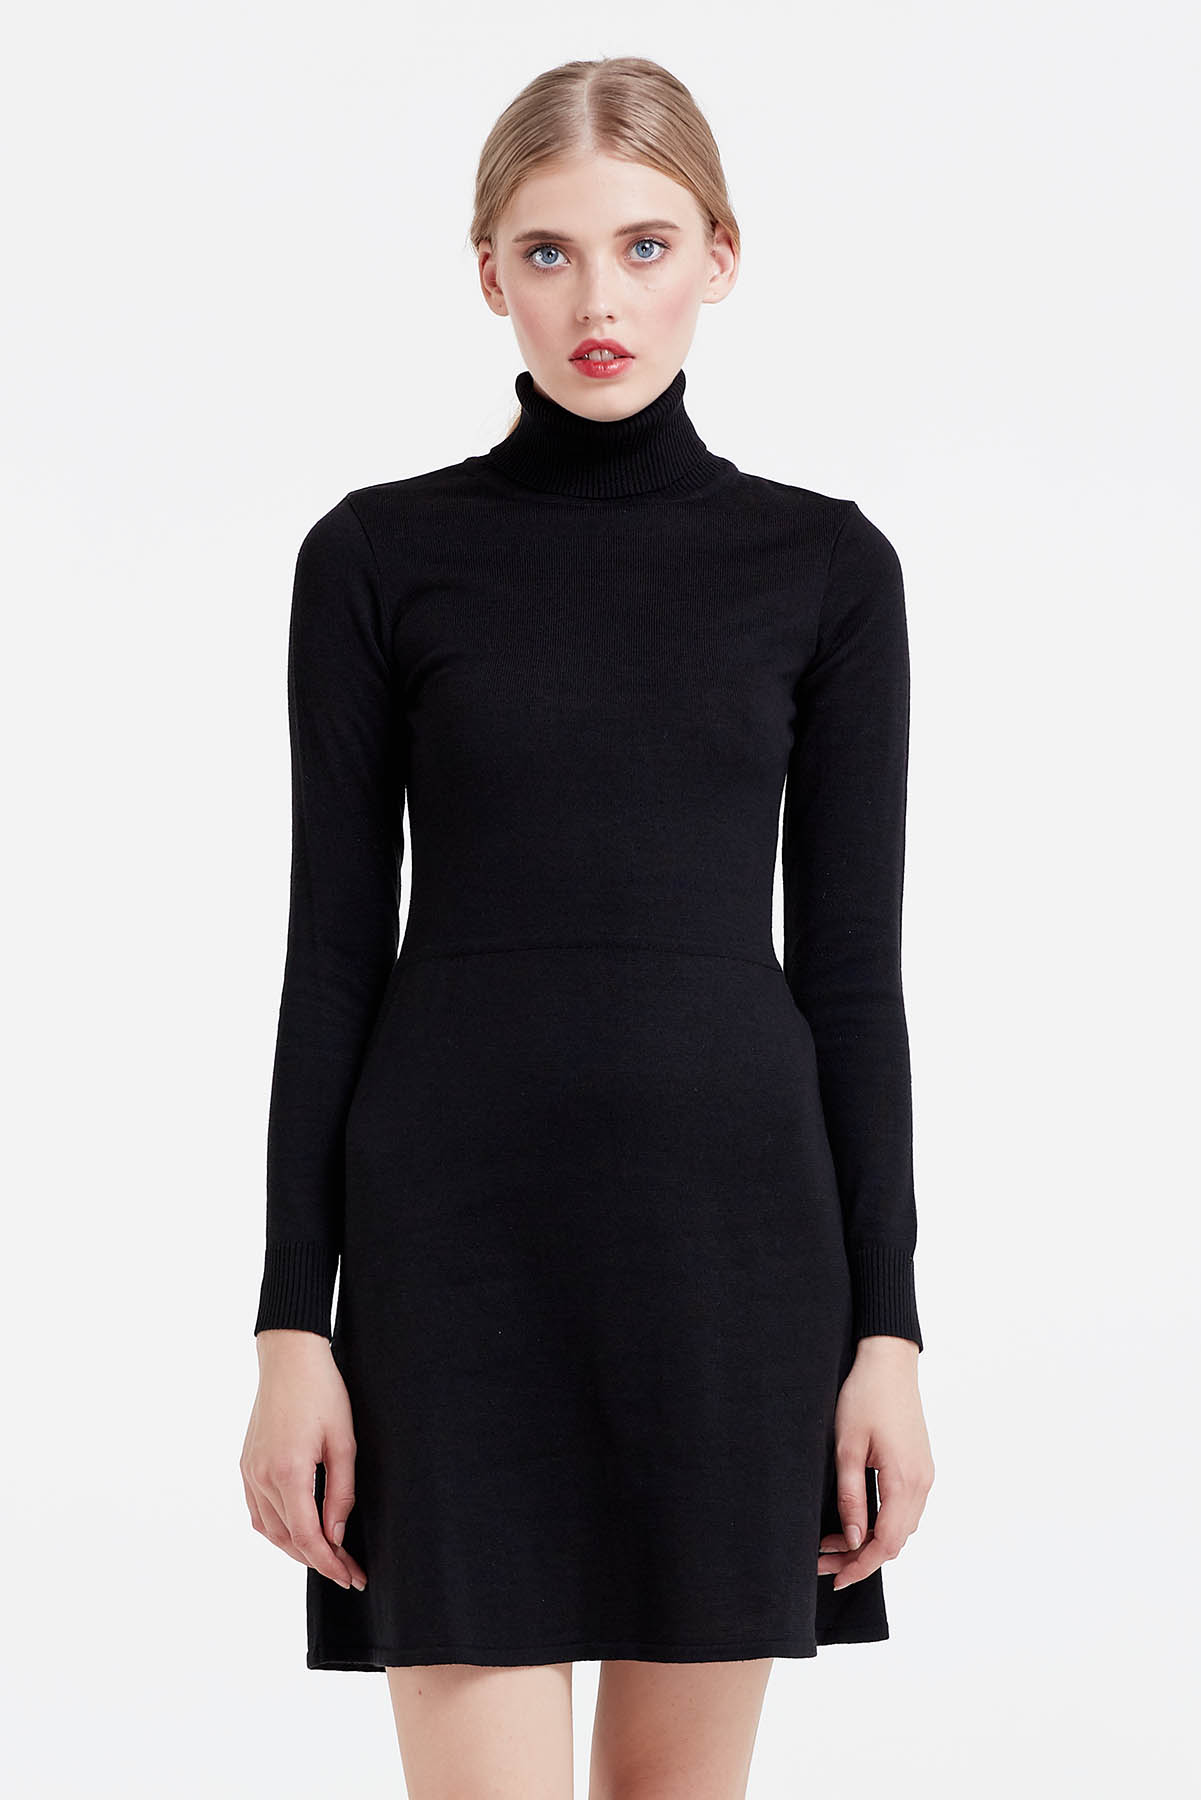 Black knitted dress , photo 1